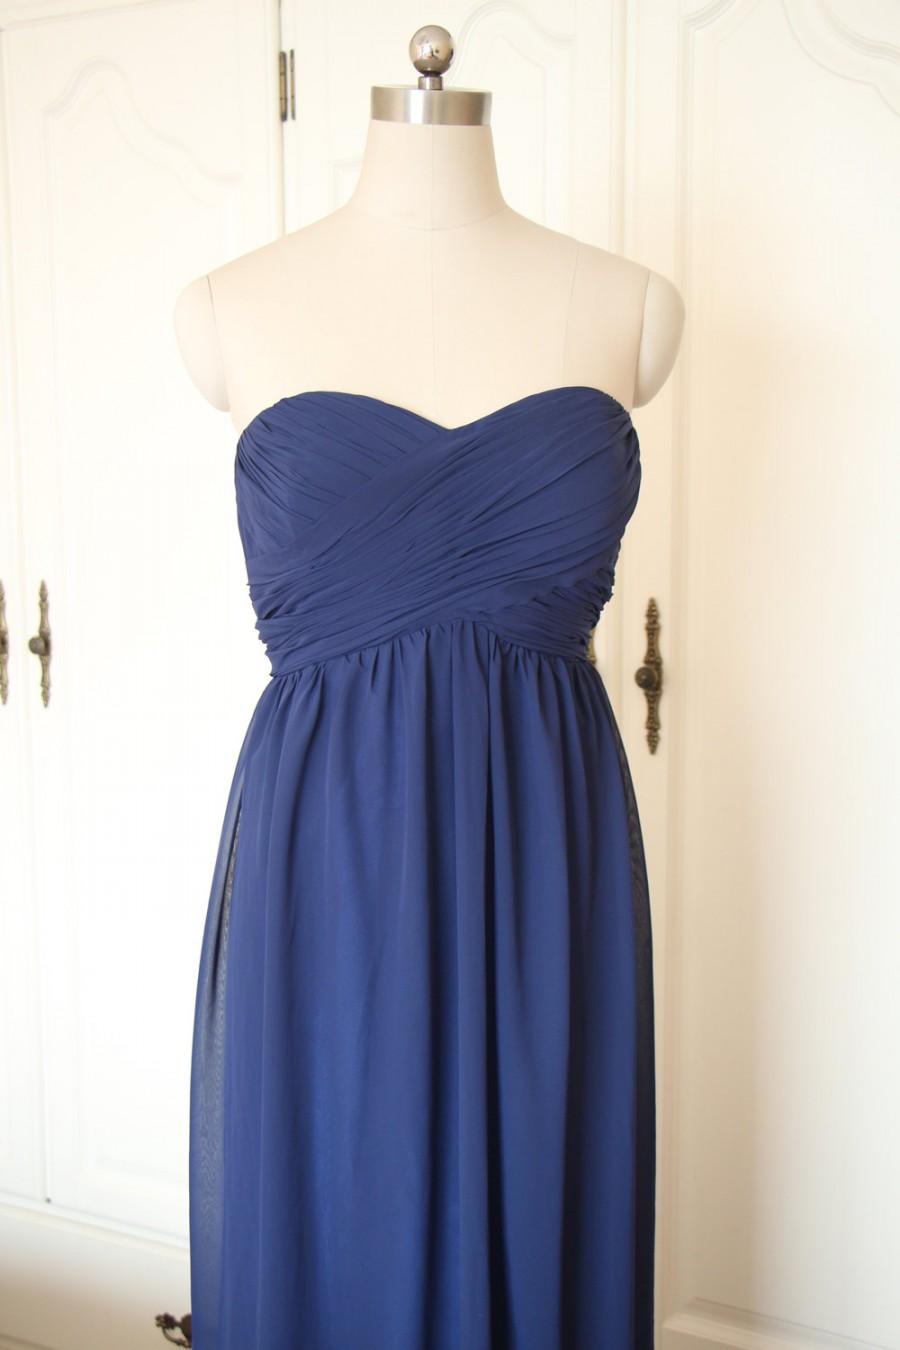 Mariage - Navy Blue Sweetheart Short/Floor-length Bridesmaid Dress Navy Chiffon Strapless Dress-Custom Dress